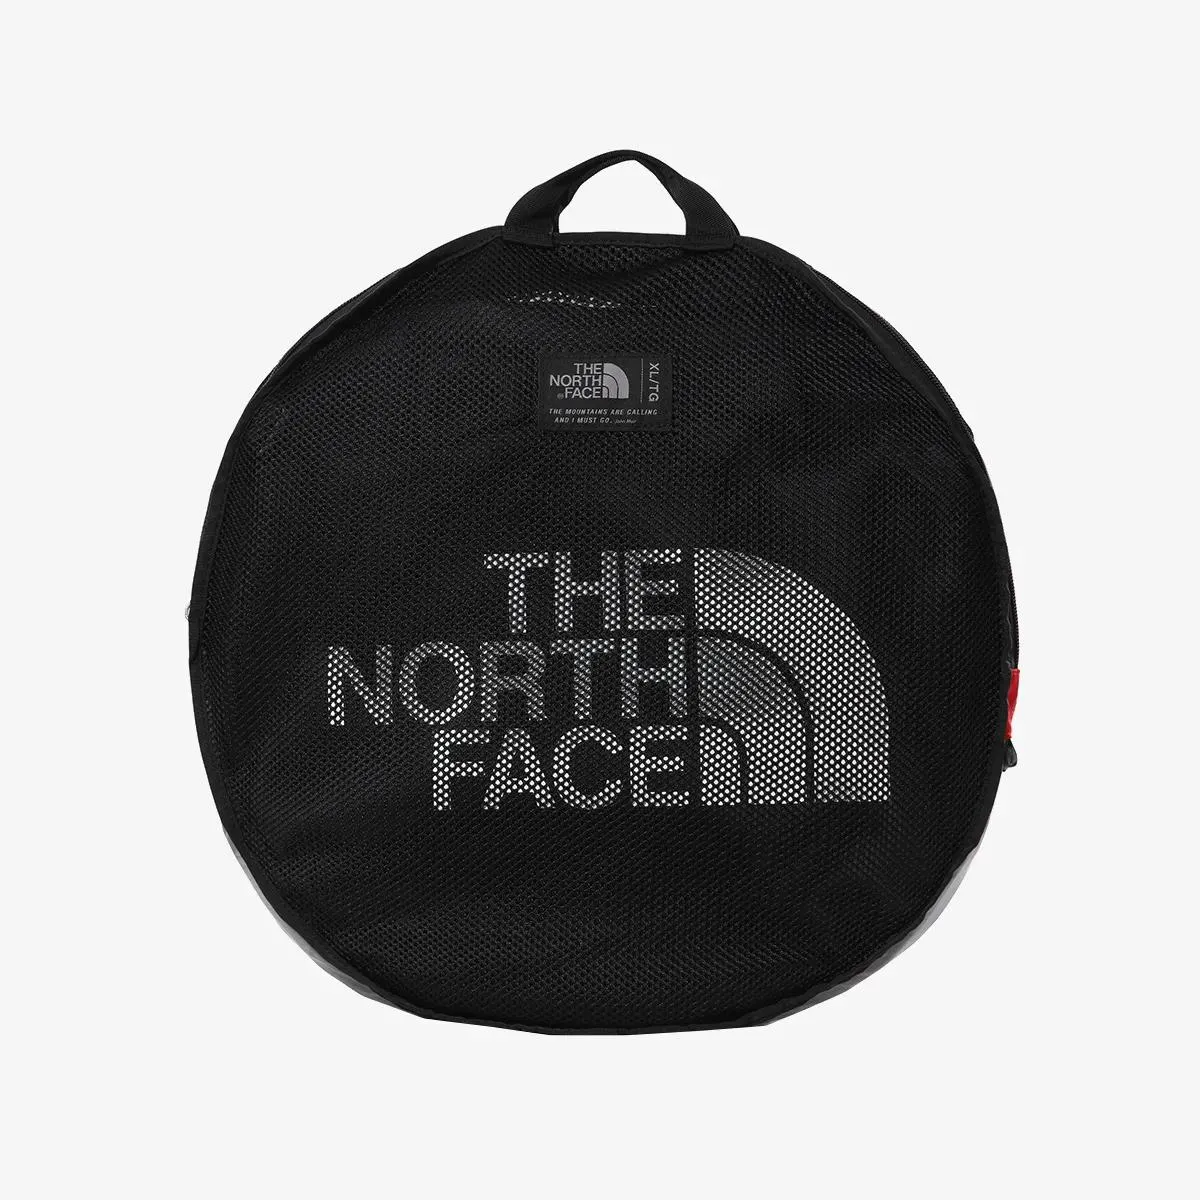 The North Face Torba BASE CAMP DUFFEL-XL TNFBLACK/TNFWHT 